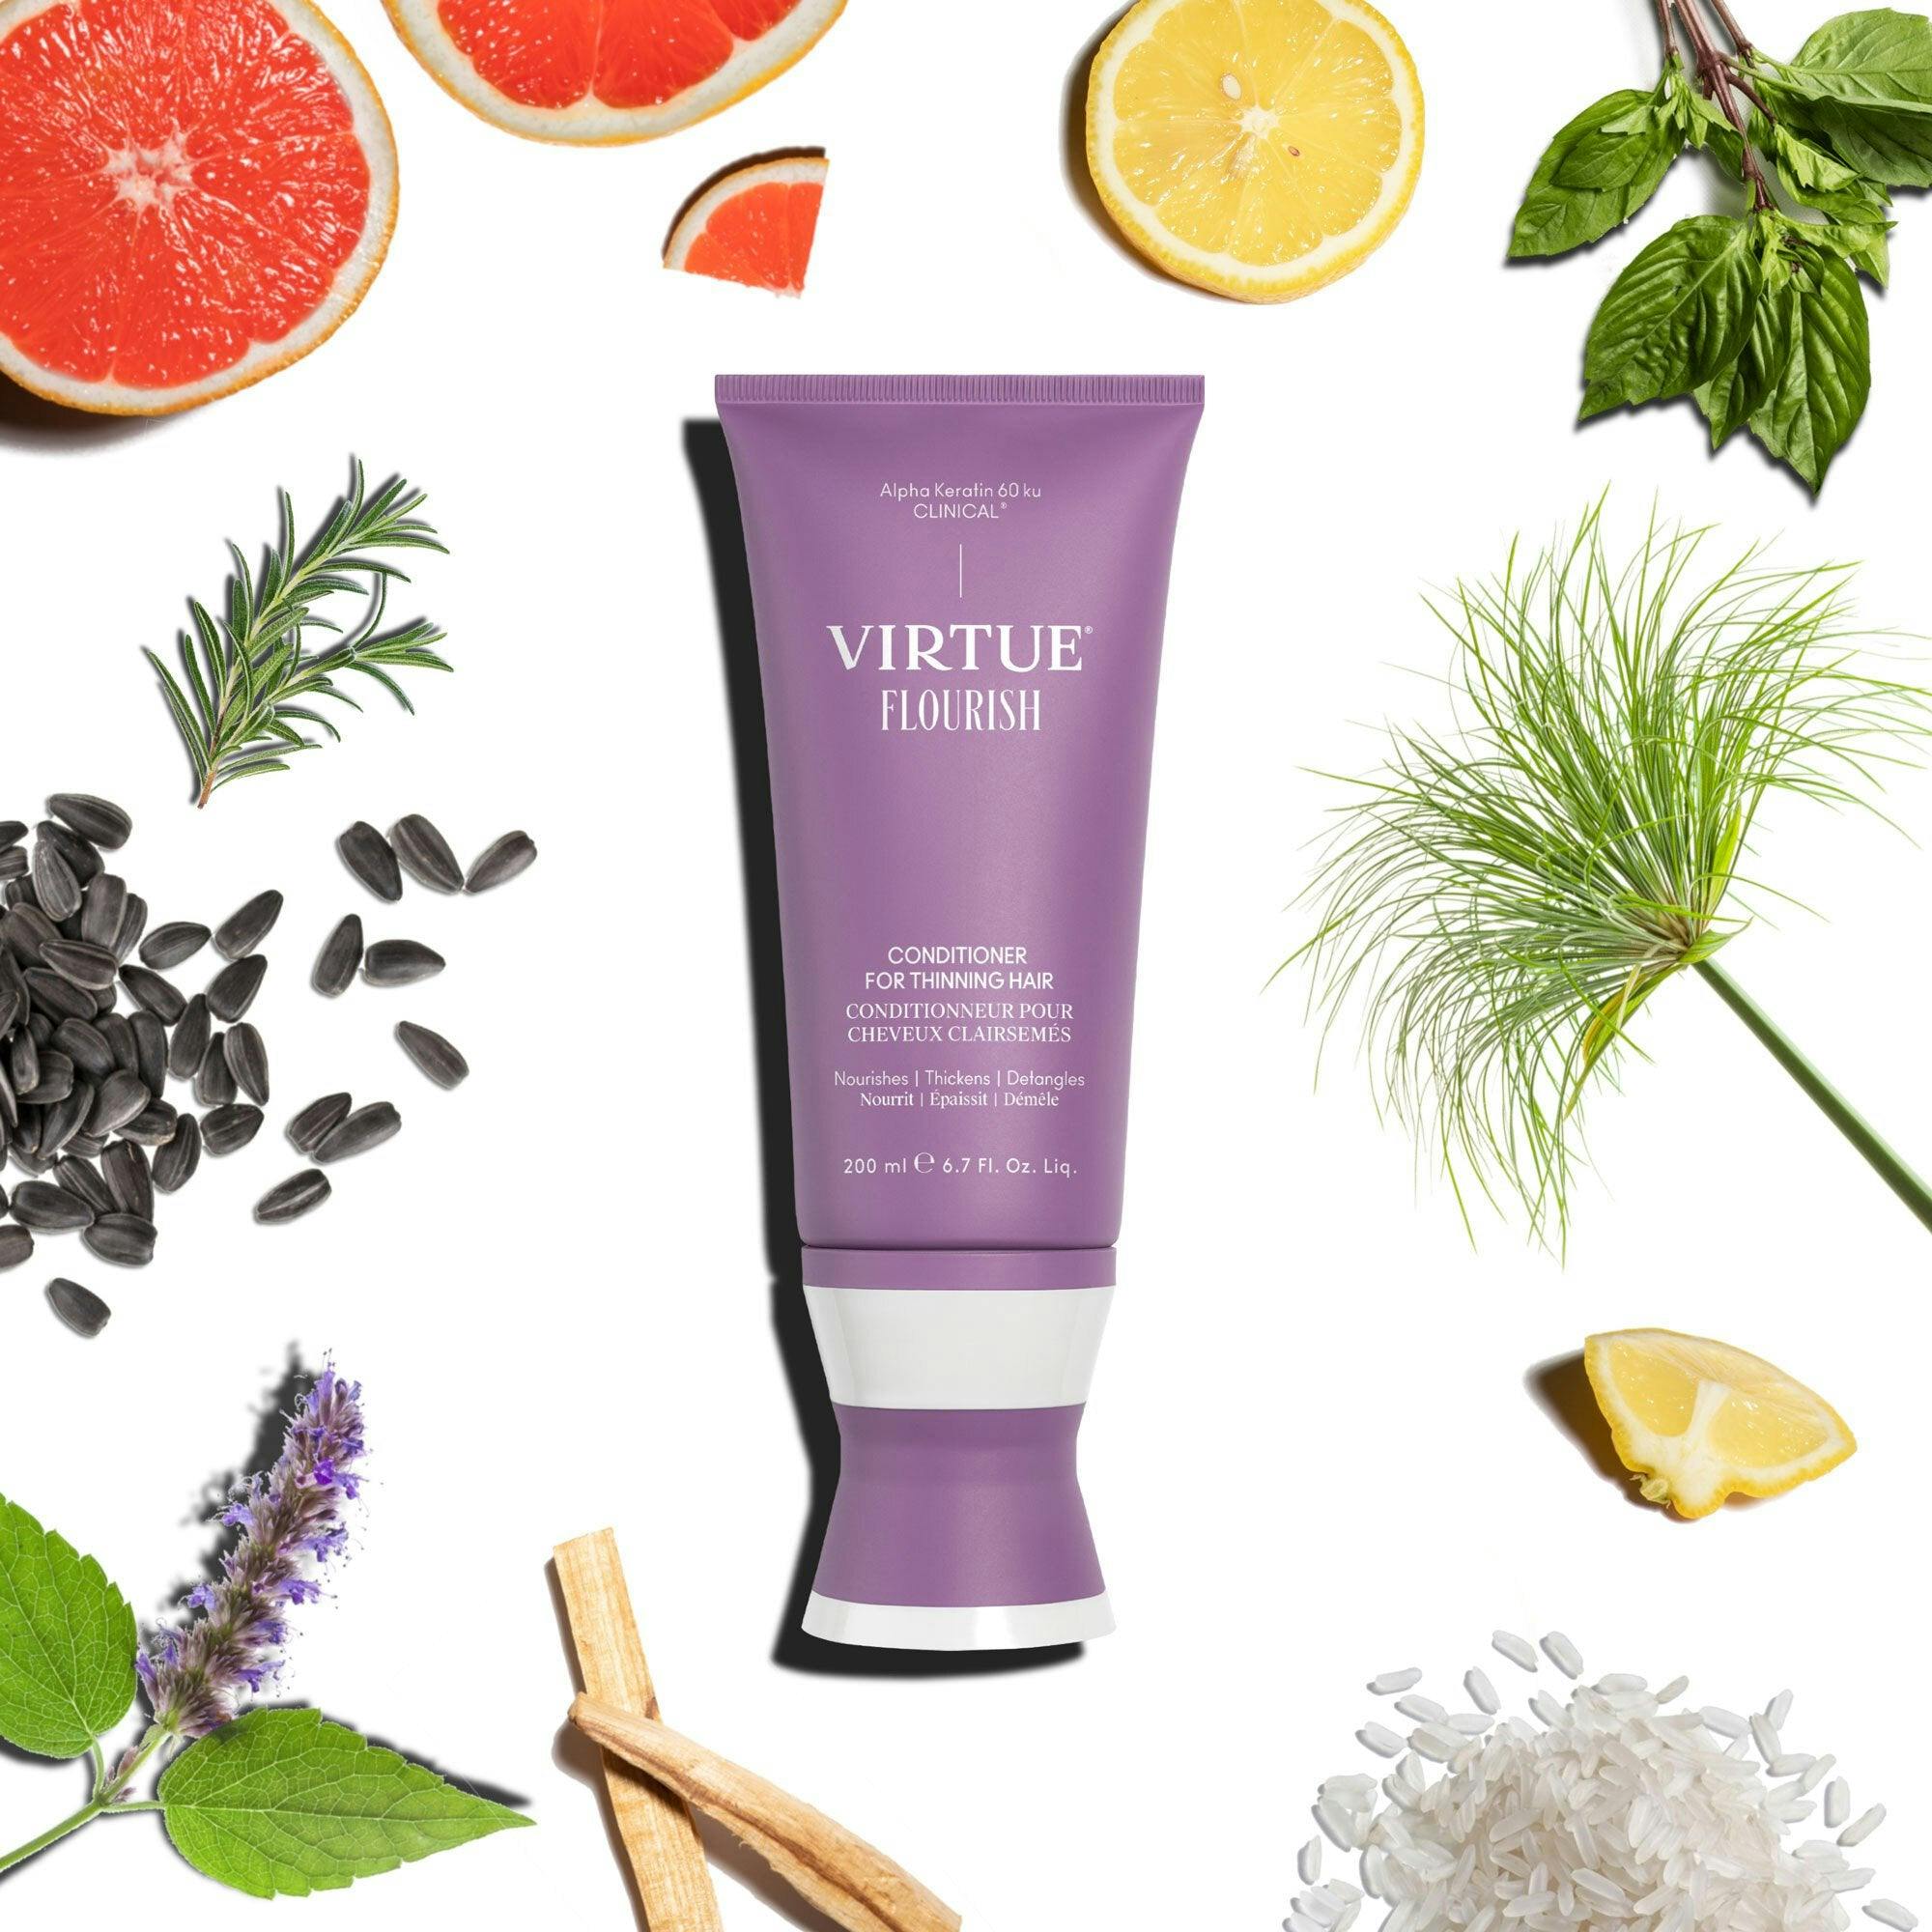 Virtue Flourish Conditioner For Thinning Hair 200ml